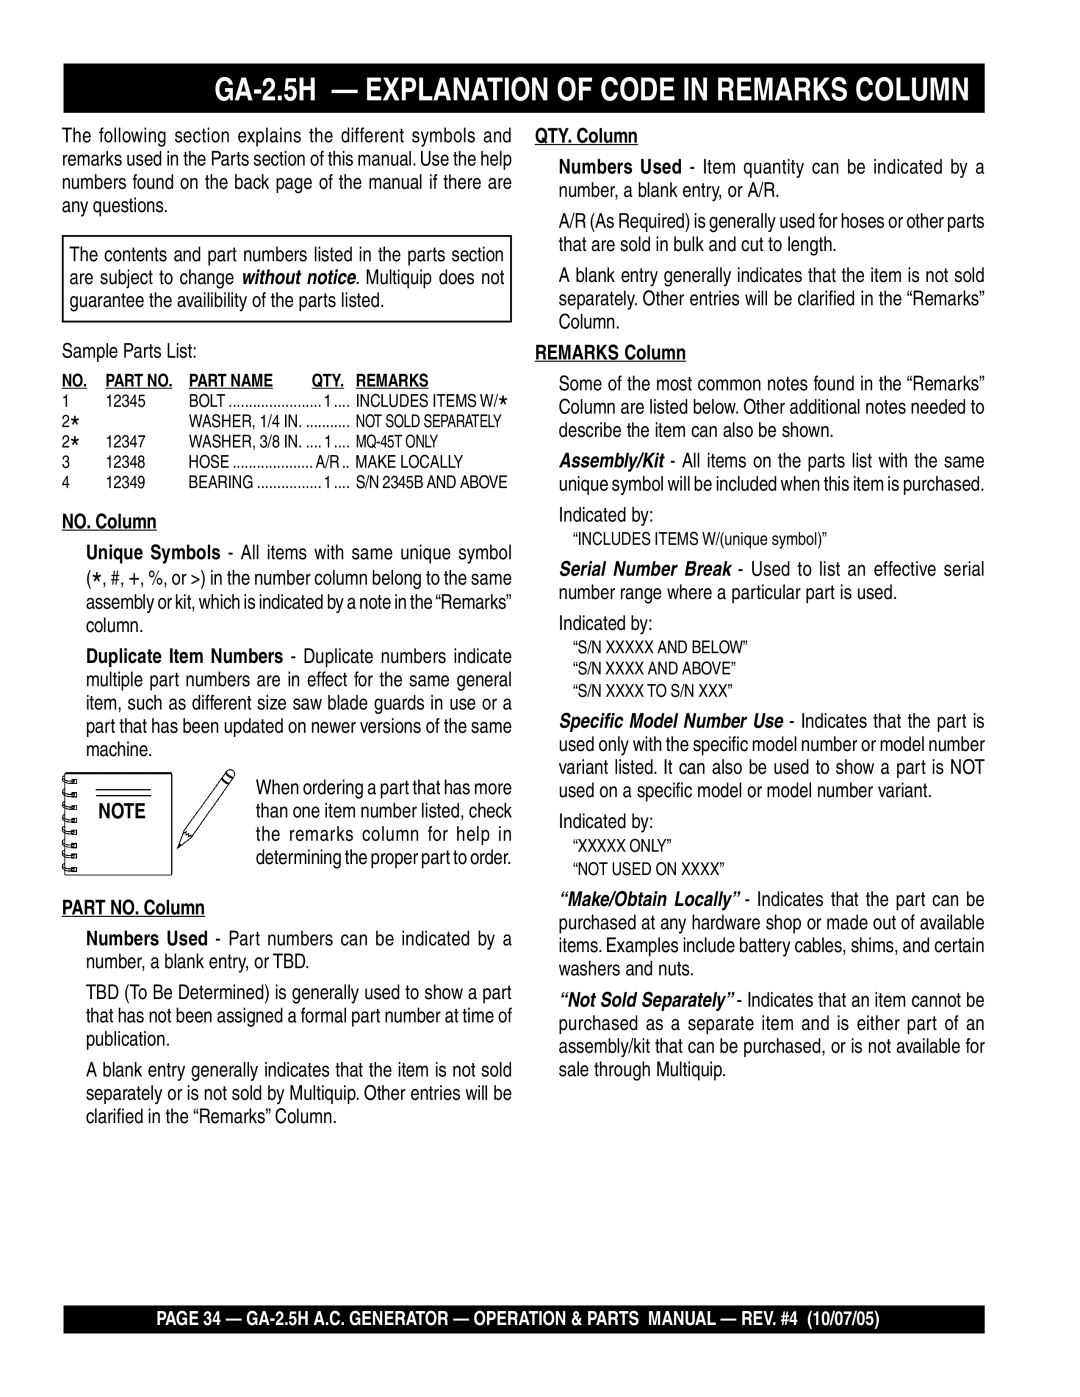 Honda Power Equipment manual GA-2.5H Explanation of Code in Remarks Column, Part NO. Column, QTY. Column 